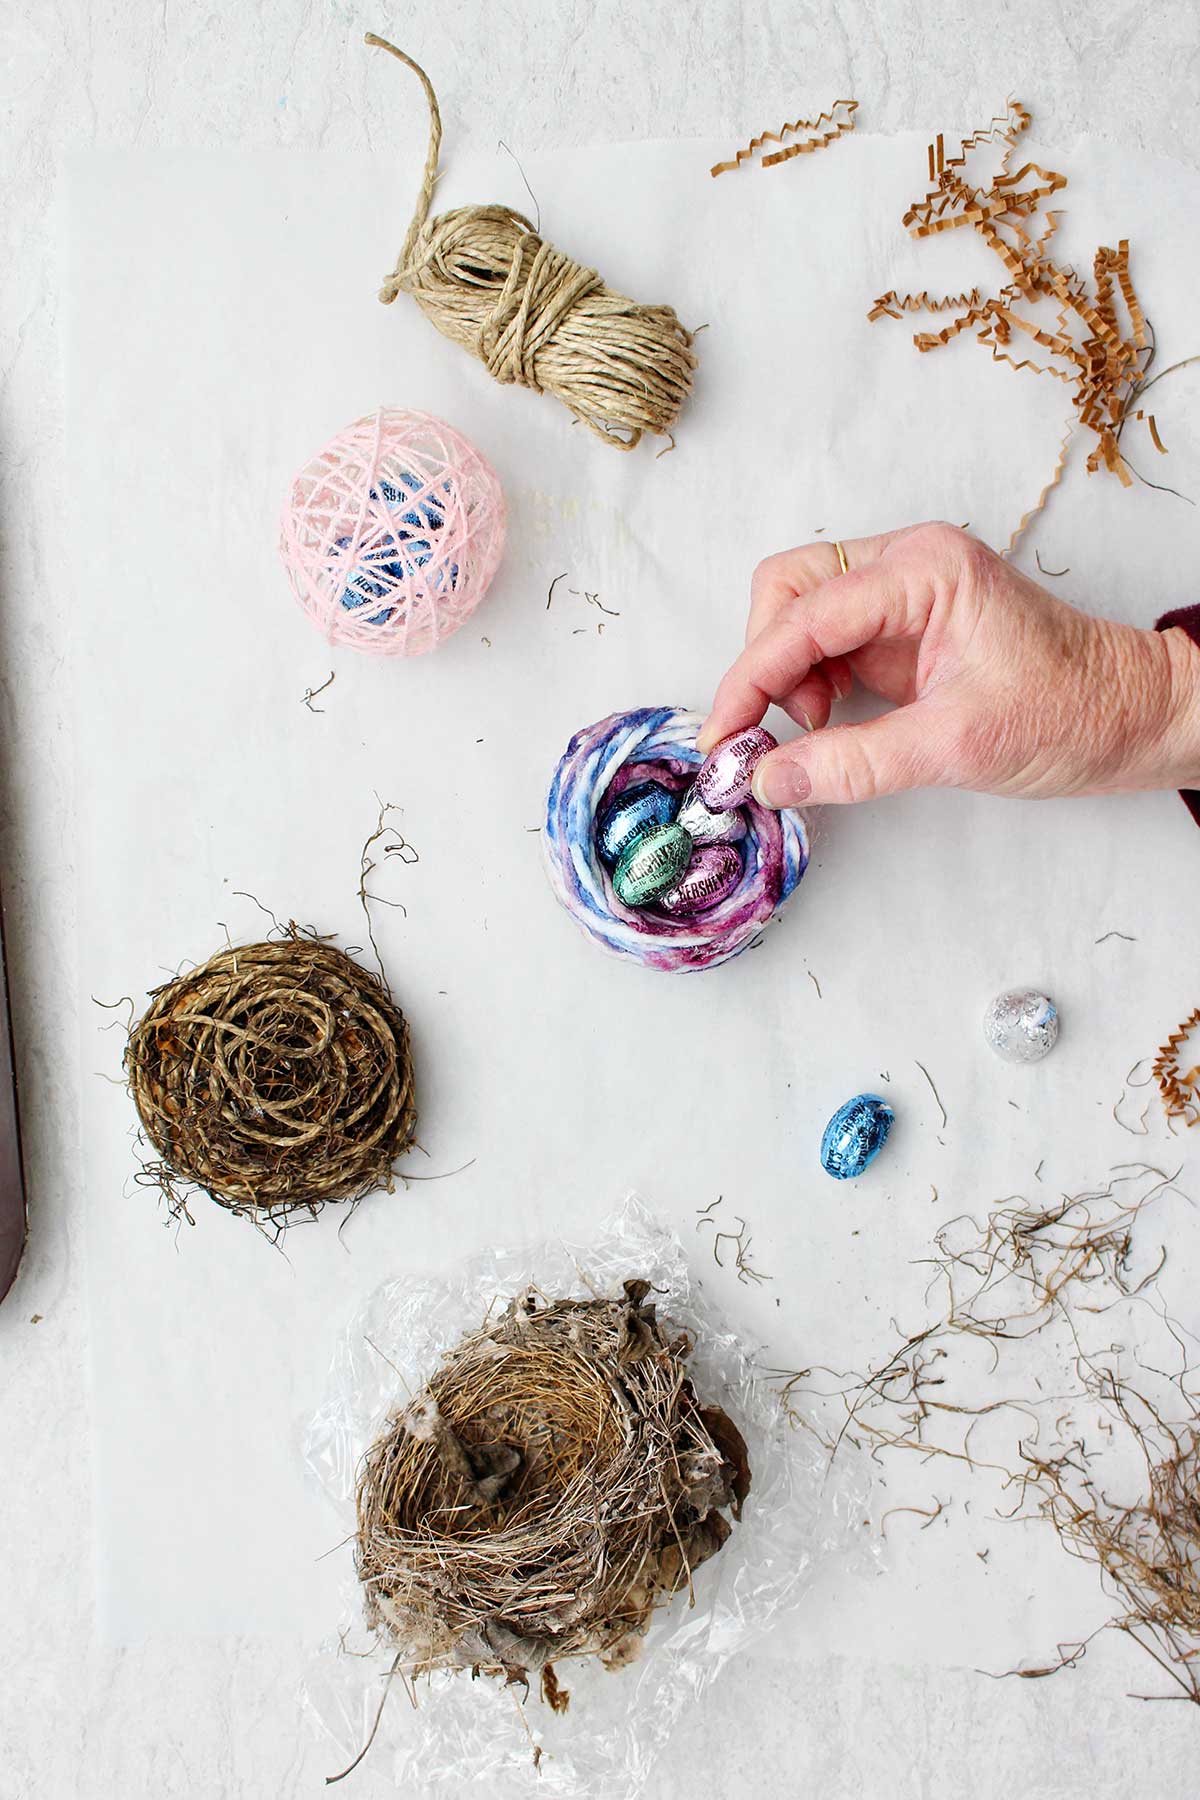 Hand placing Hershey chocolate eggs inside bird nest made of colorful yarn.